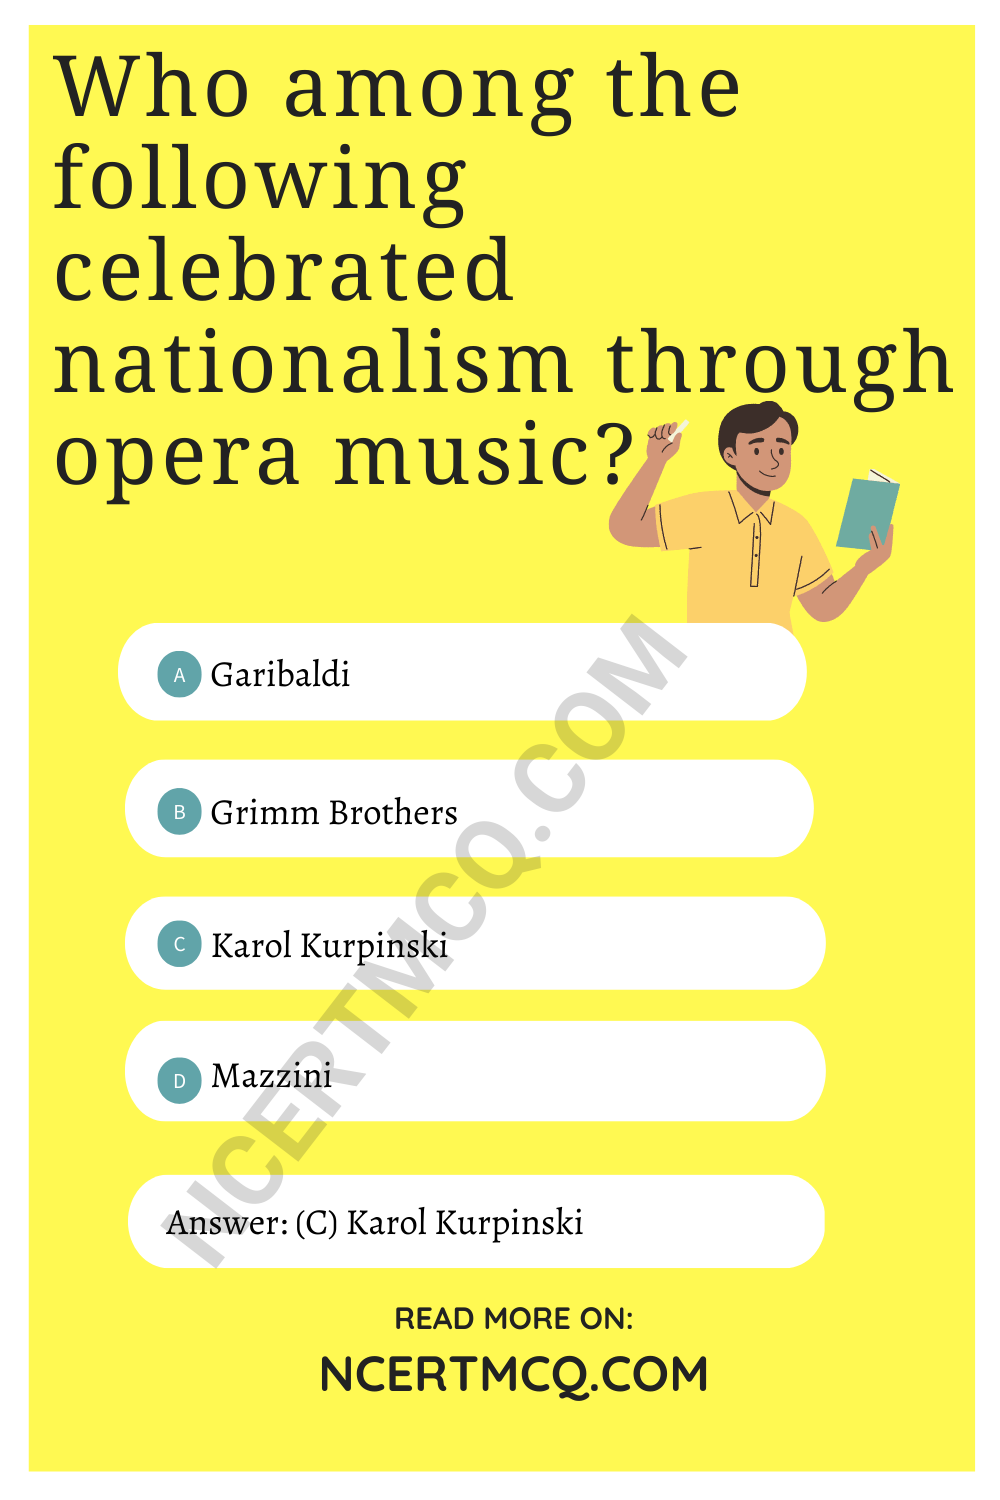 Who among the following celebrated nationalism through opera music?